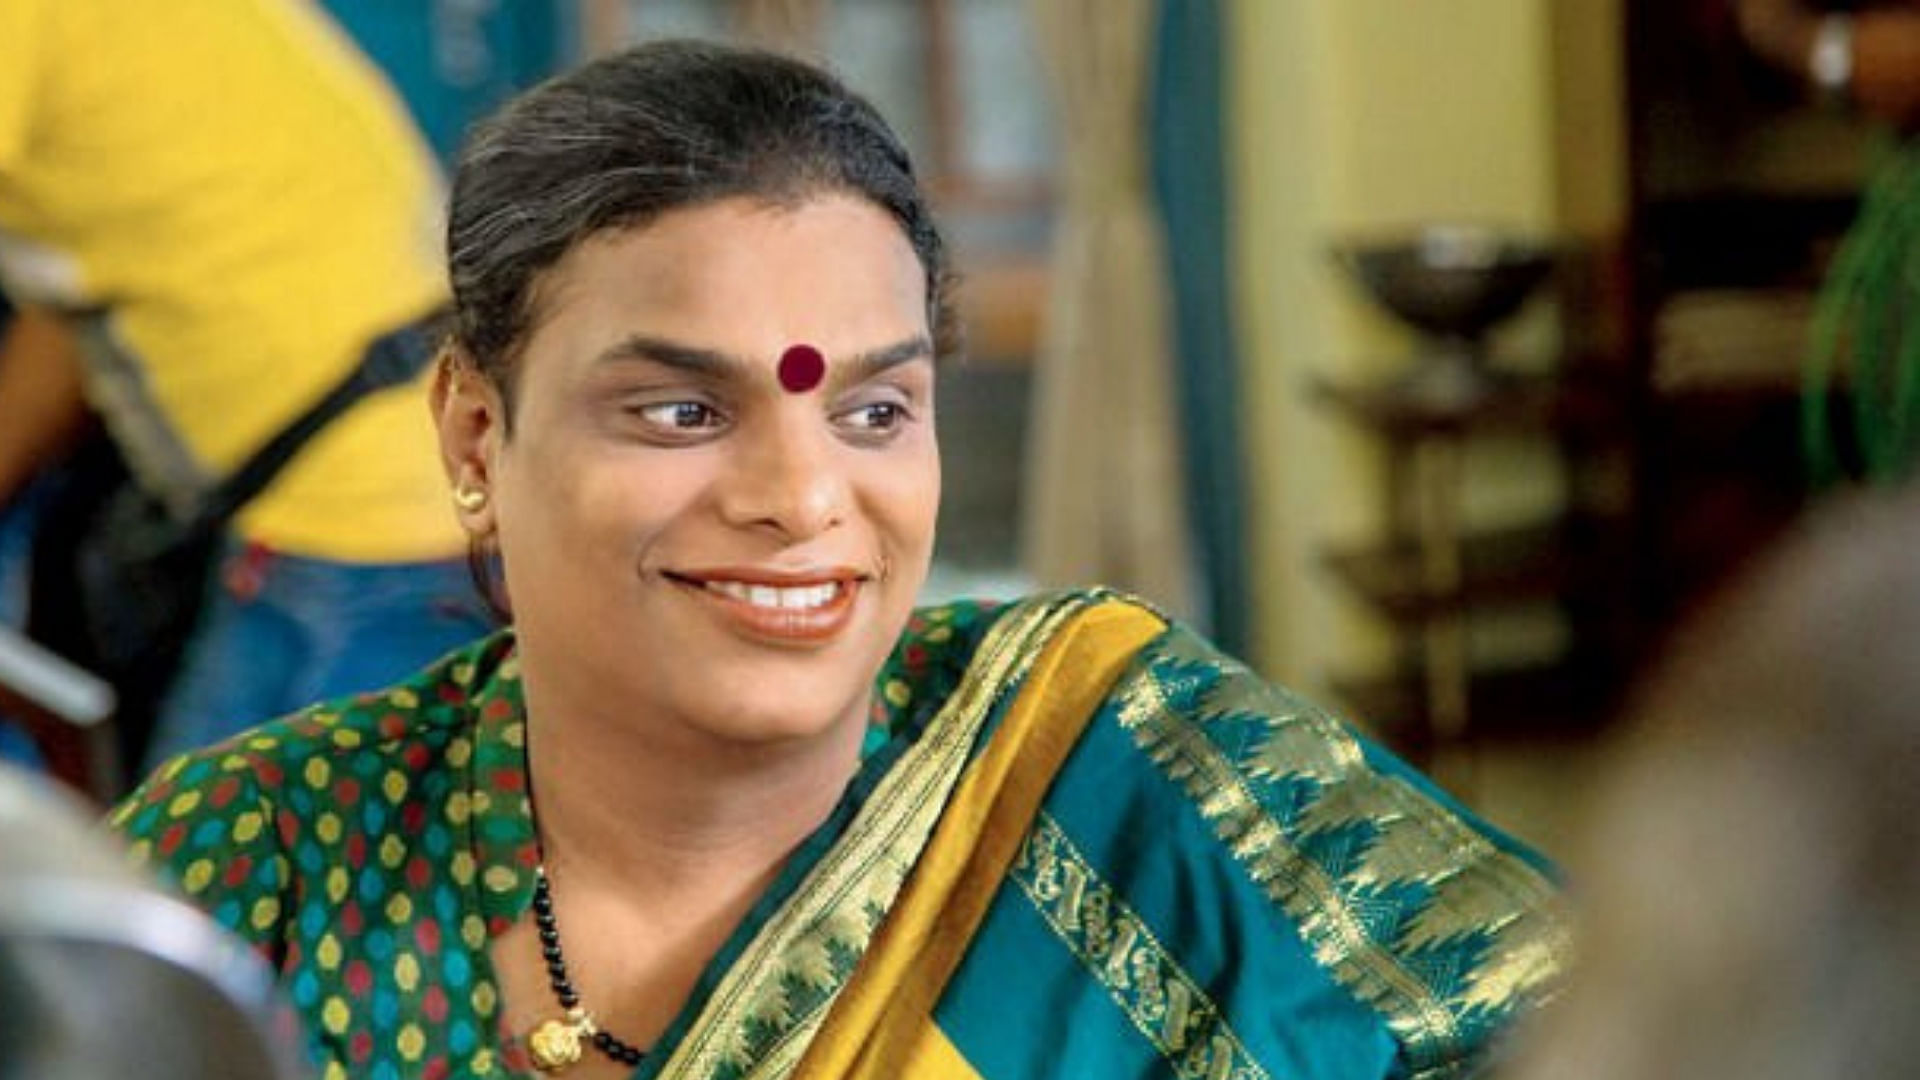 Gauri Sawant has become India’s first transgender election ambassador.